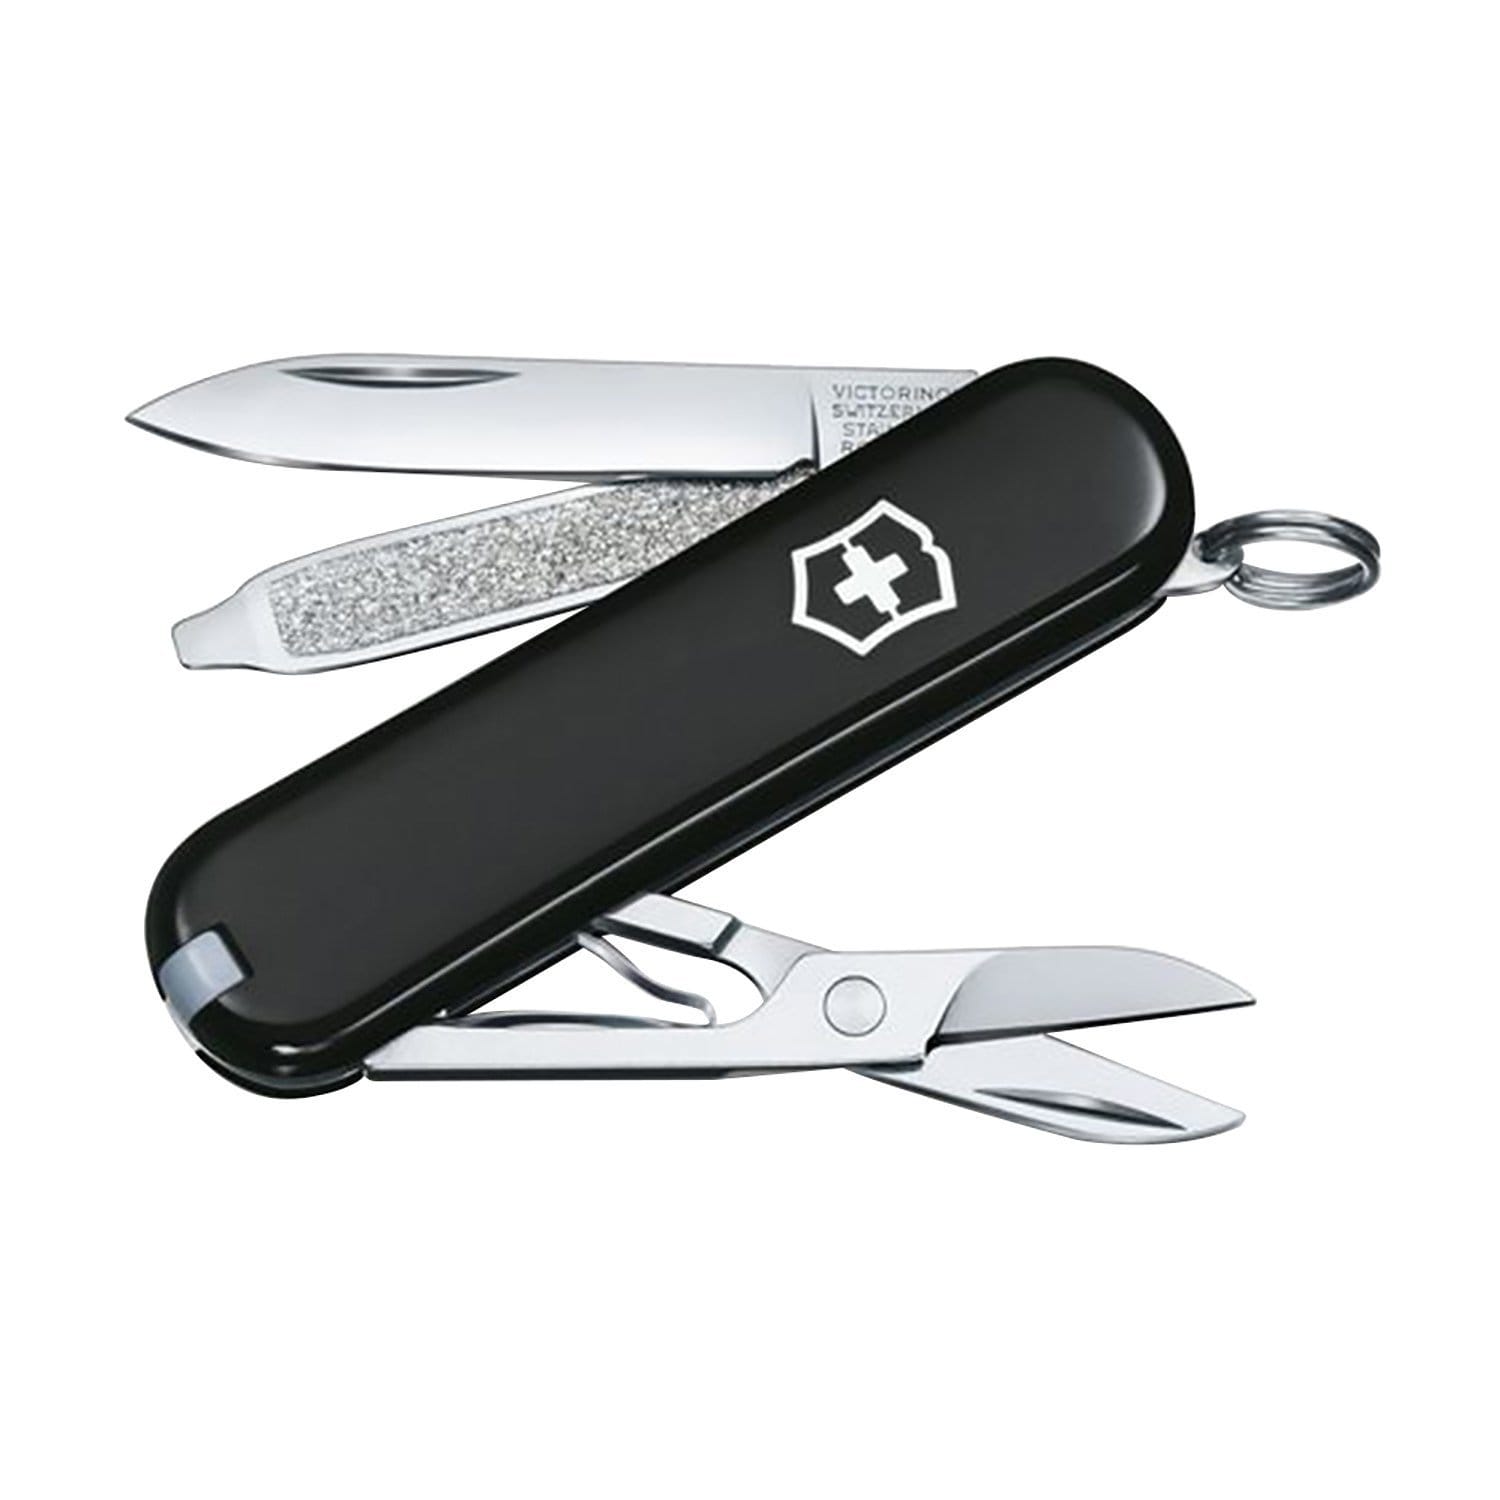 Victorinox كلاسيك SD سكين جيب صغير - أسود - 0.6223.3 - Jashanmal الرئيسية